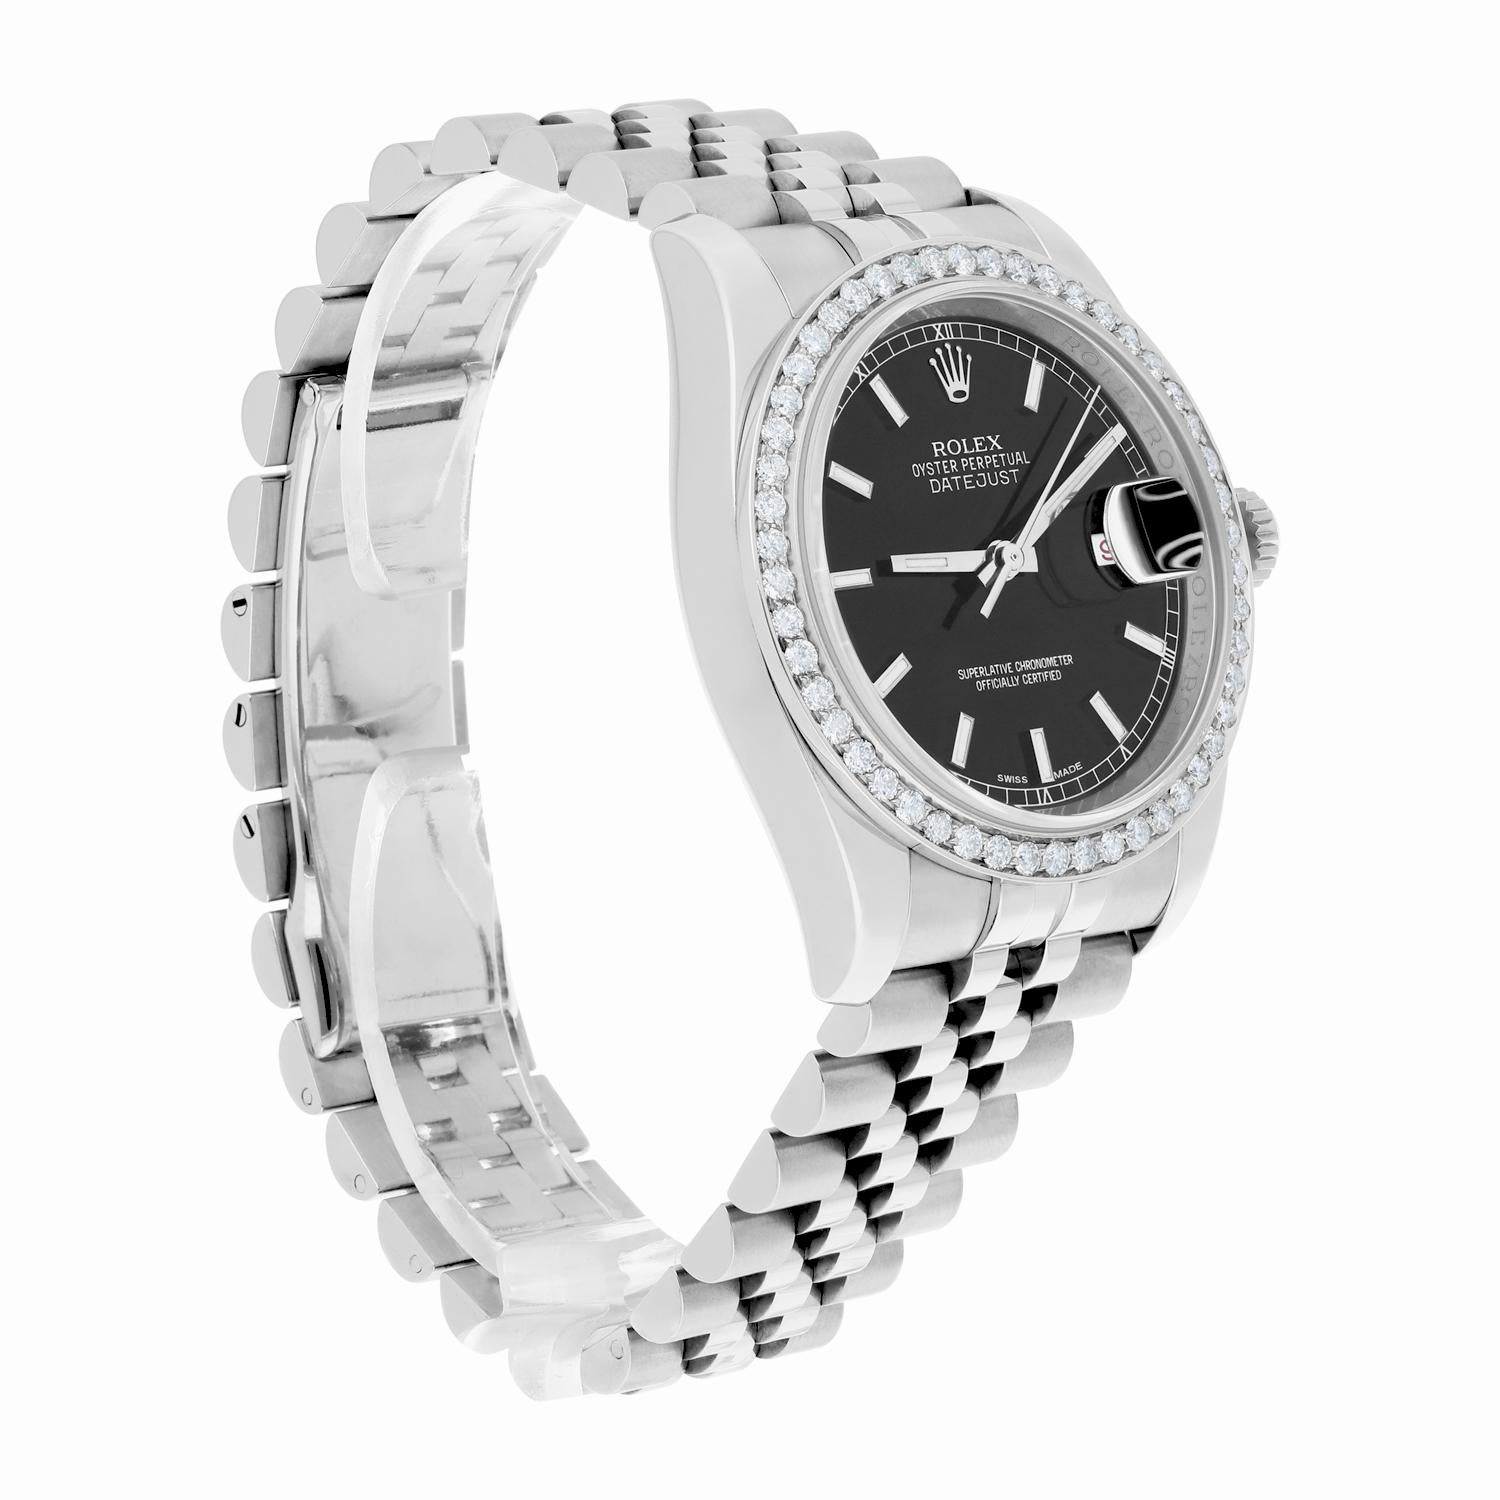 Rolex Datejust 36 Steel Watch Diamond Bezel Black Index Dial Jubilee Band 116234 For Sale 2